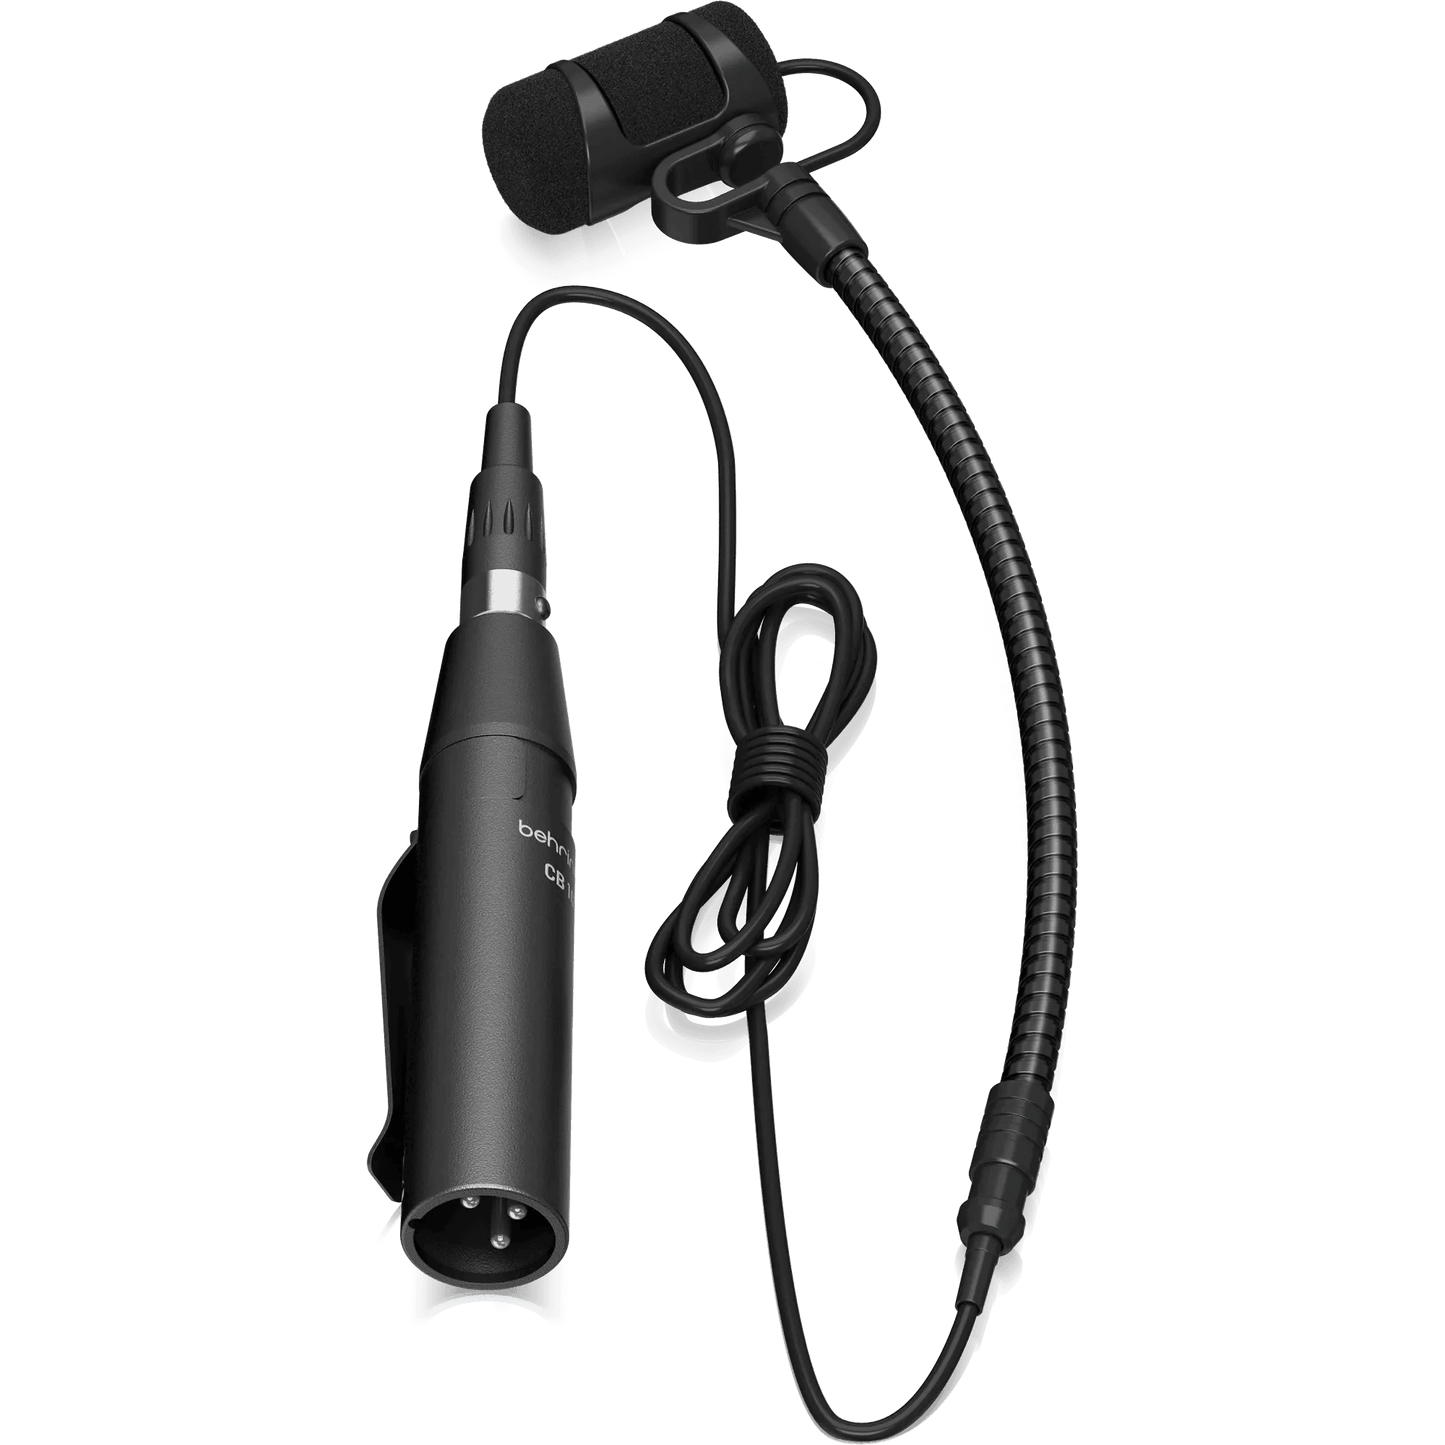 Behringer CB 100 Condenser Gooseneck Microphone for Instrument Applications